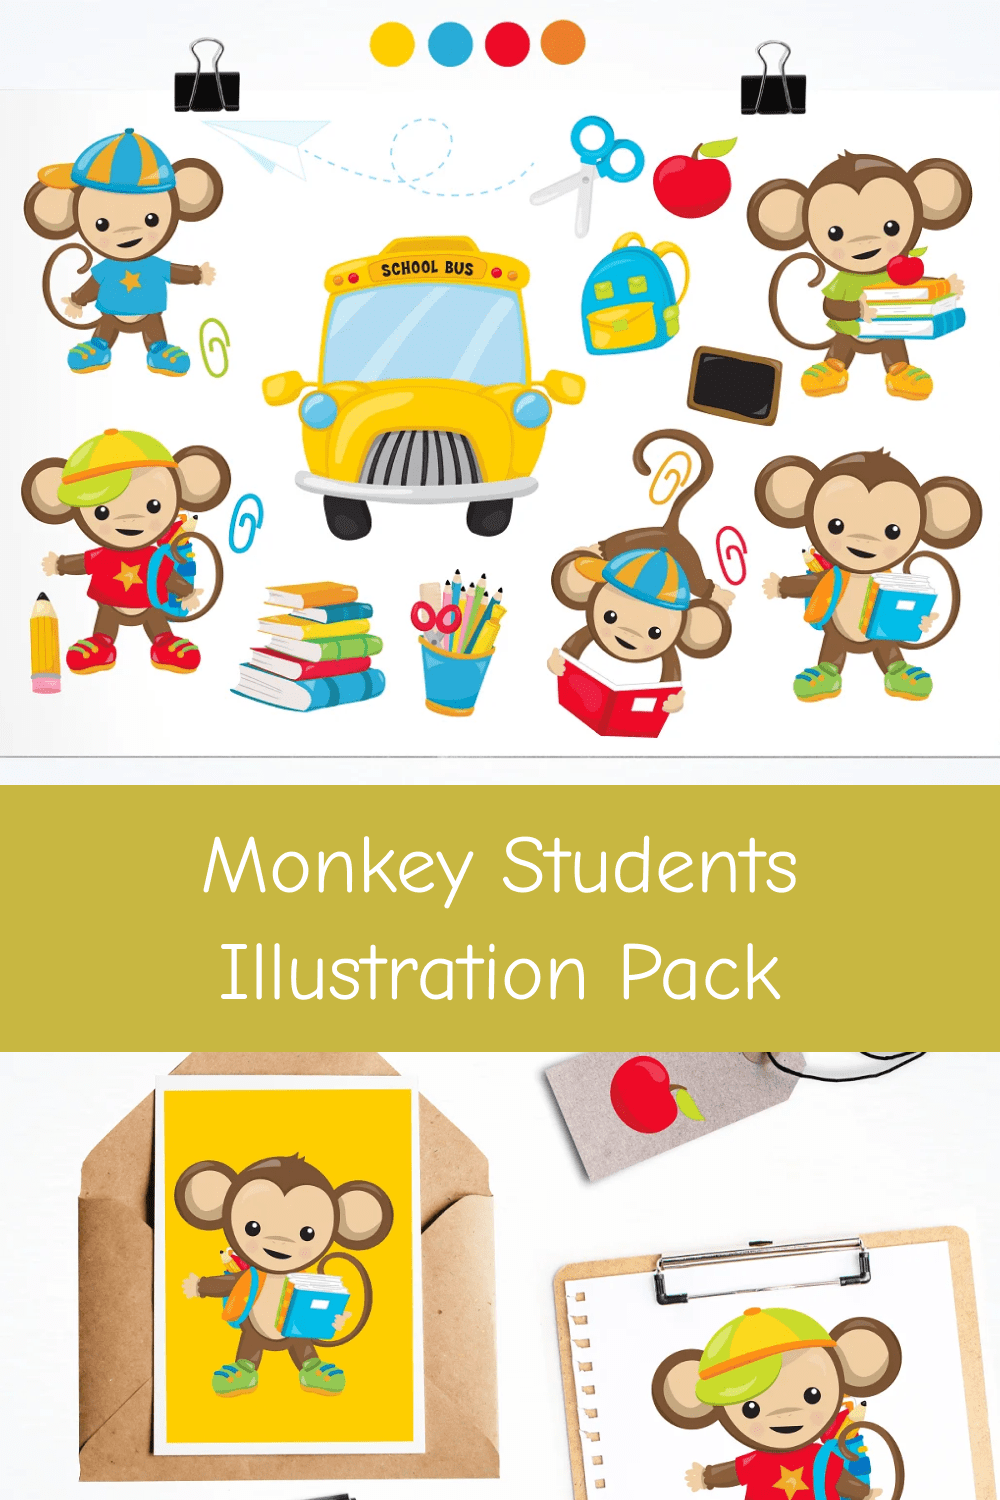 Monkey Students Illustration Pack.